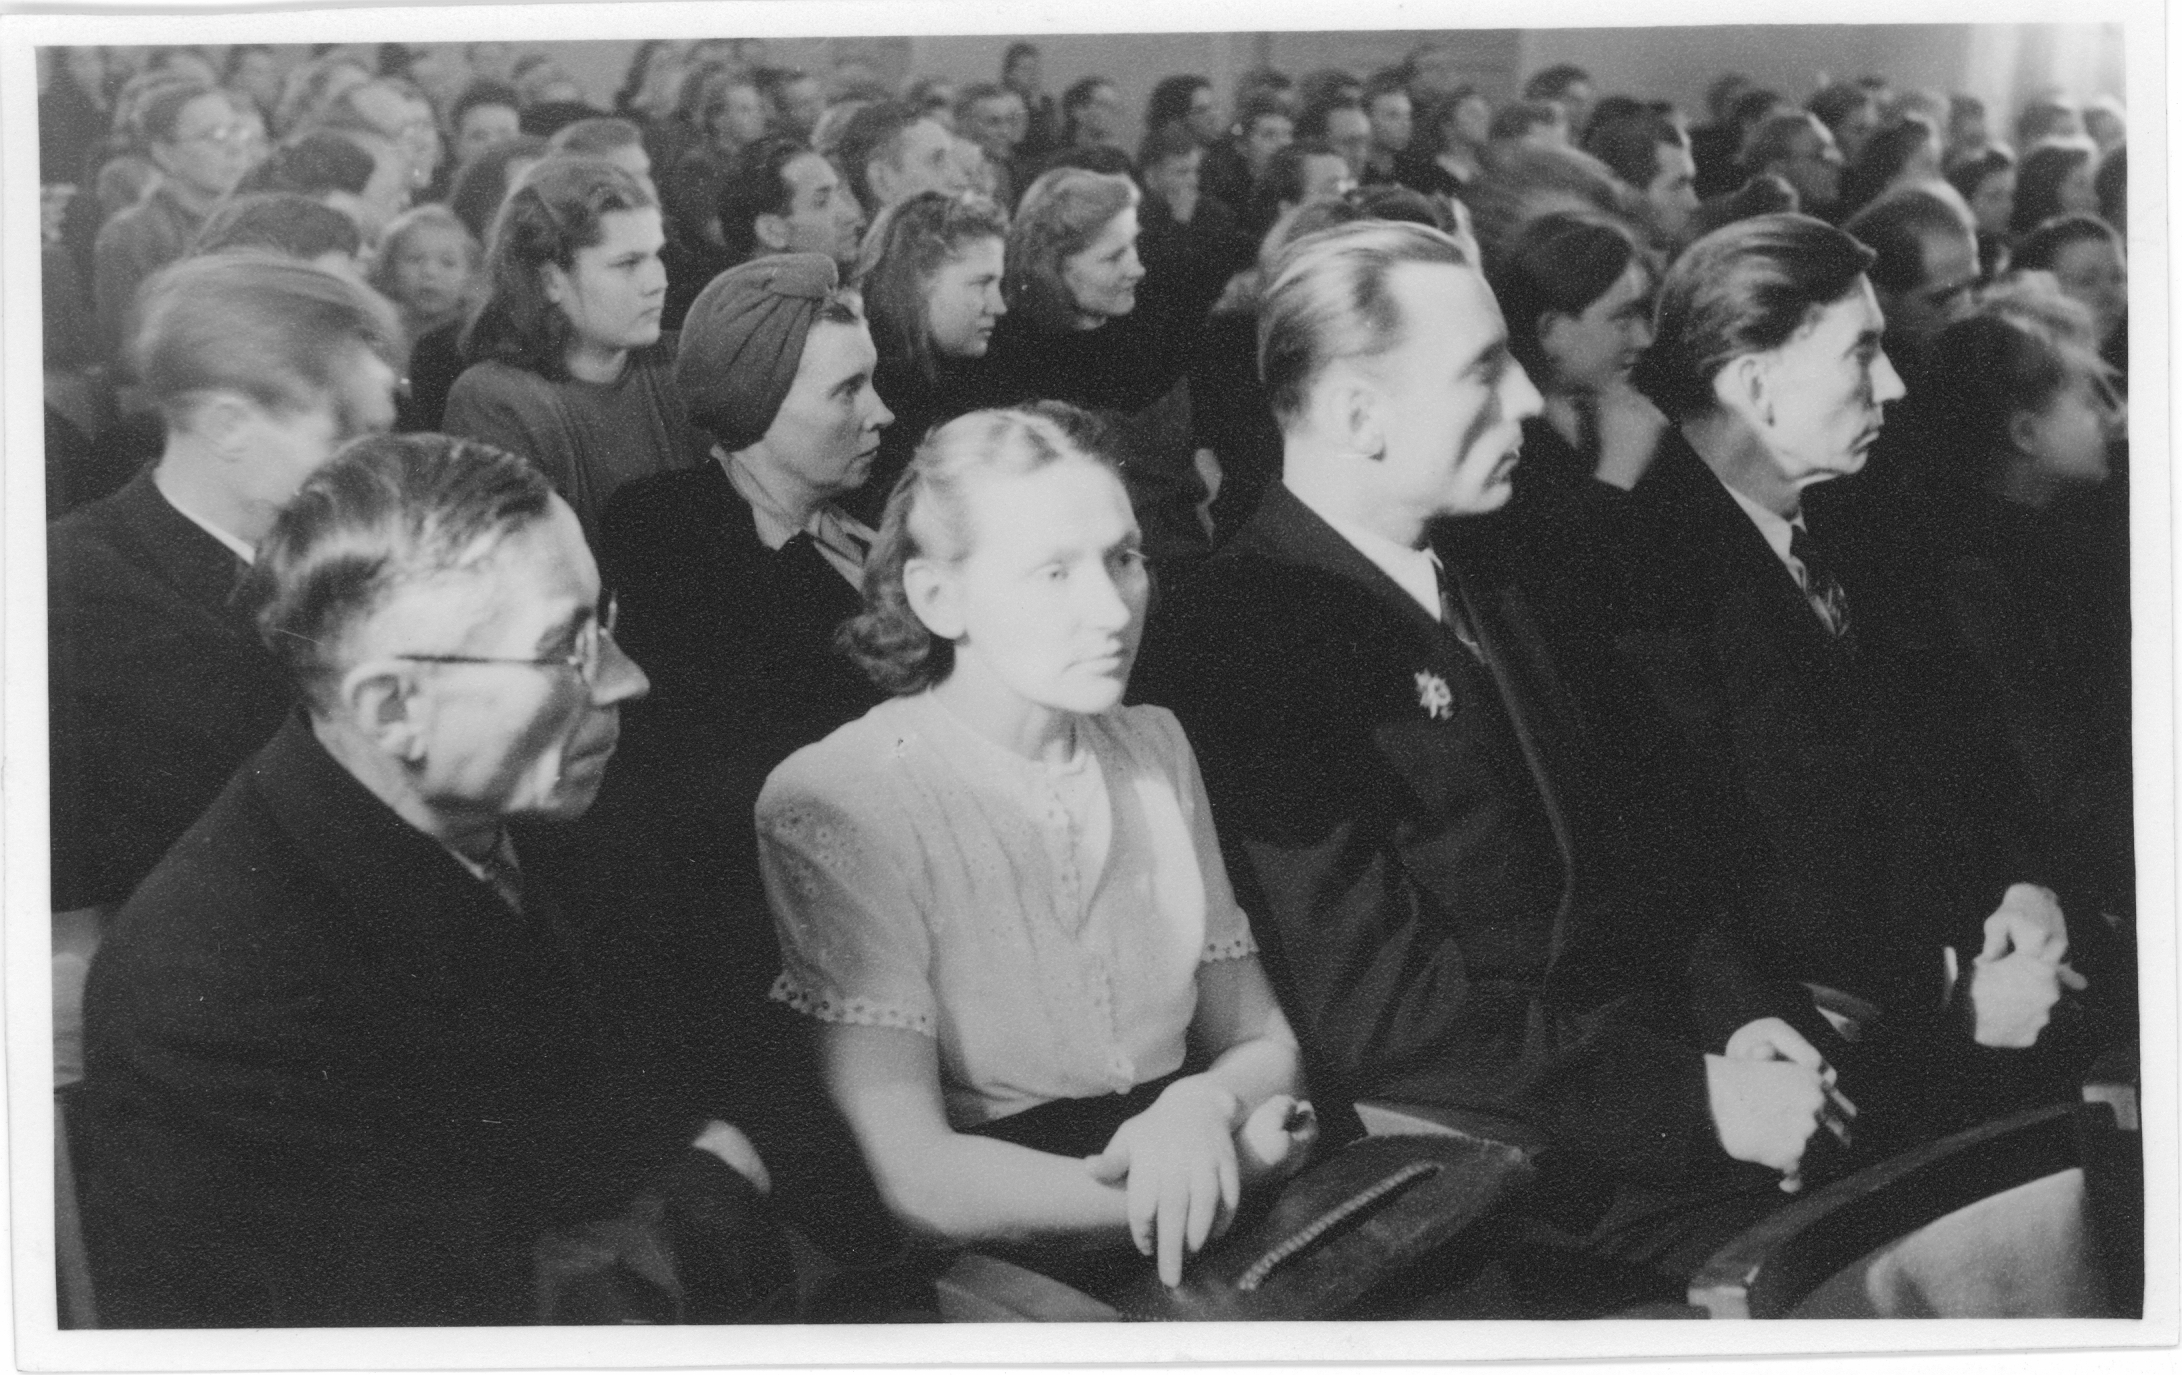 Celebration of the I congress of Estonian Soviet writers in the concert hall "Estonia". I r. 1. H. Raudsepp, 2. M. Nurme